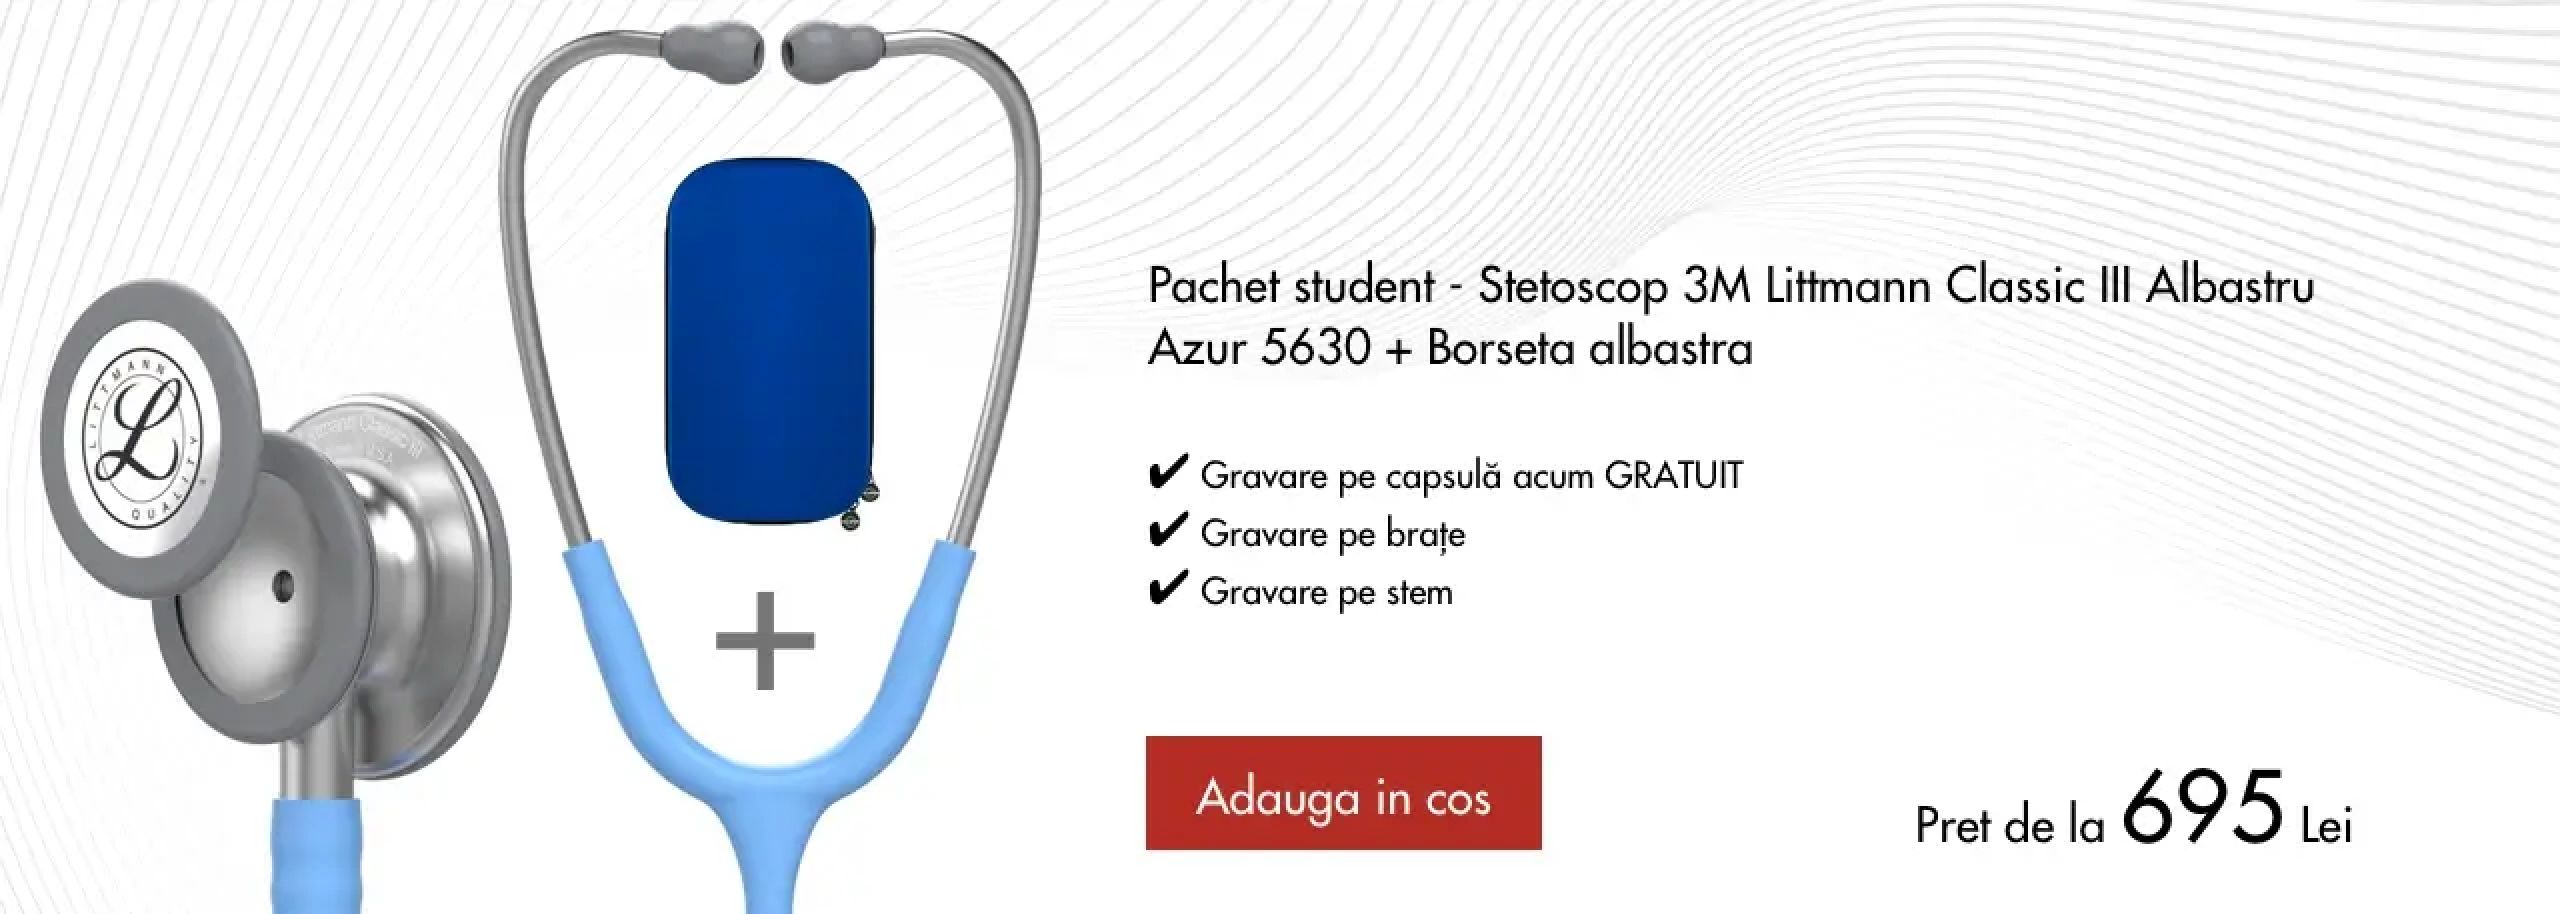 Pachet student - Stetoscop 3M Littmann Classic III Albastru Azur 5630 + Borseta albastra